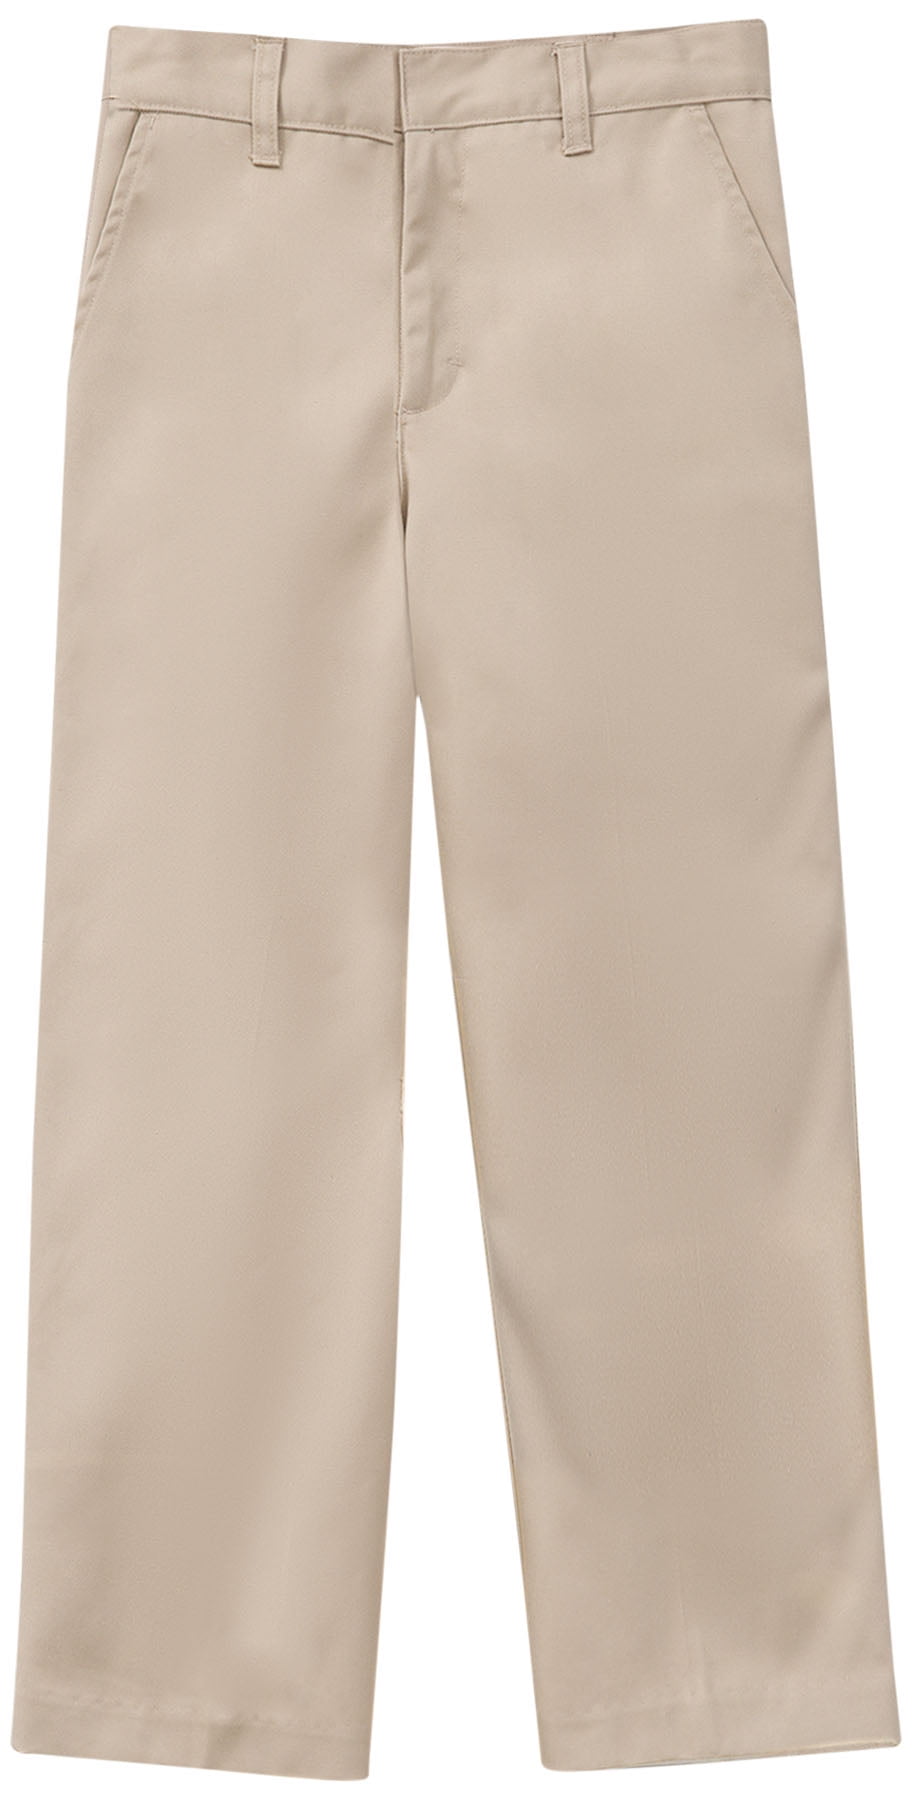 Boys Khaki Pants Flat Front Genuine School Uniforms Sizes 4 to 20 